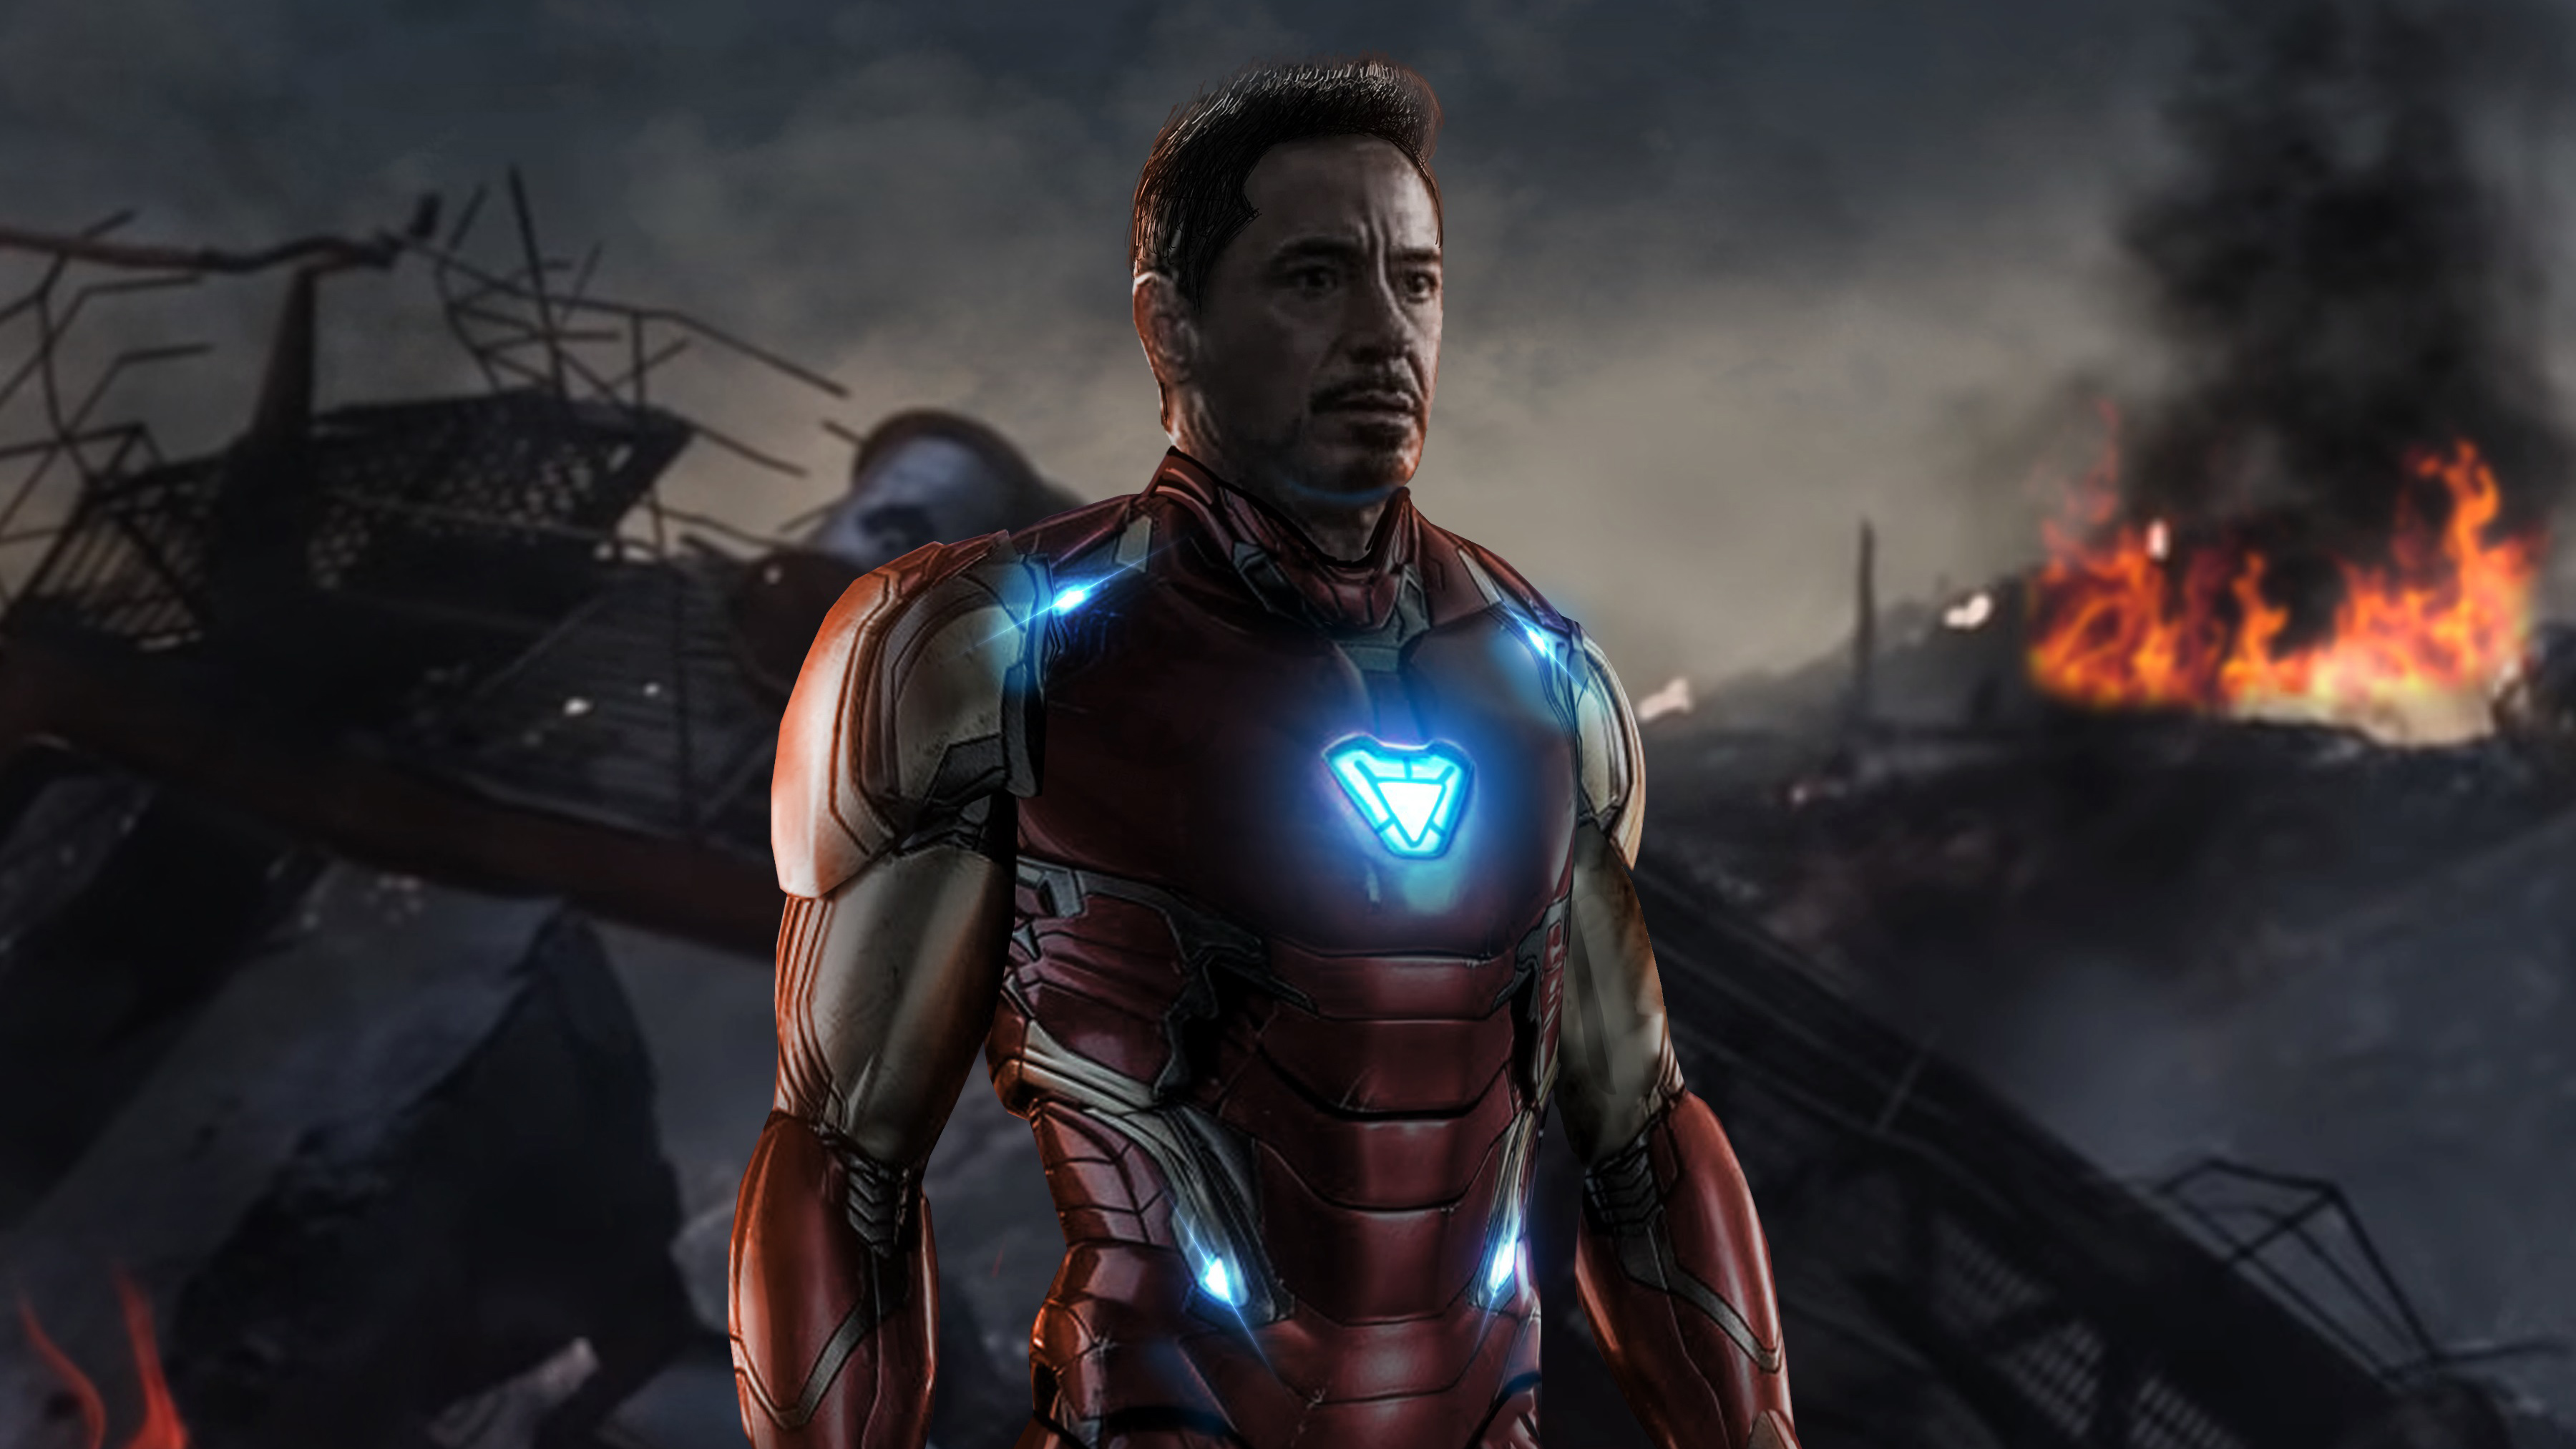  Iron  Man  Avengers Endgame  HD Movies 4k  Wallpapers  